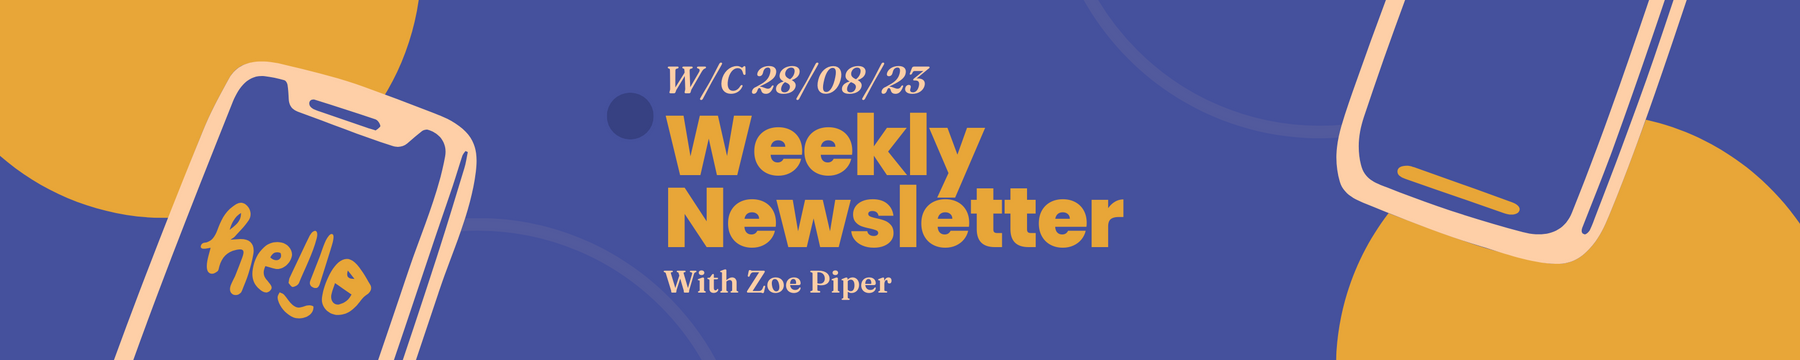 Weekly Newsletter W/C 28/09/23